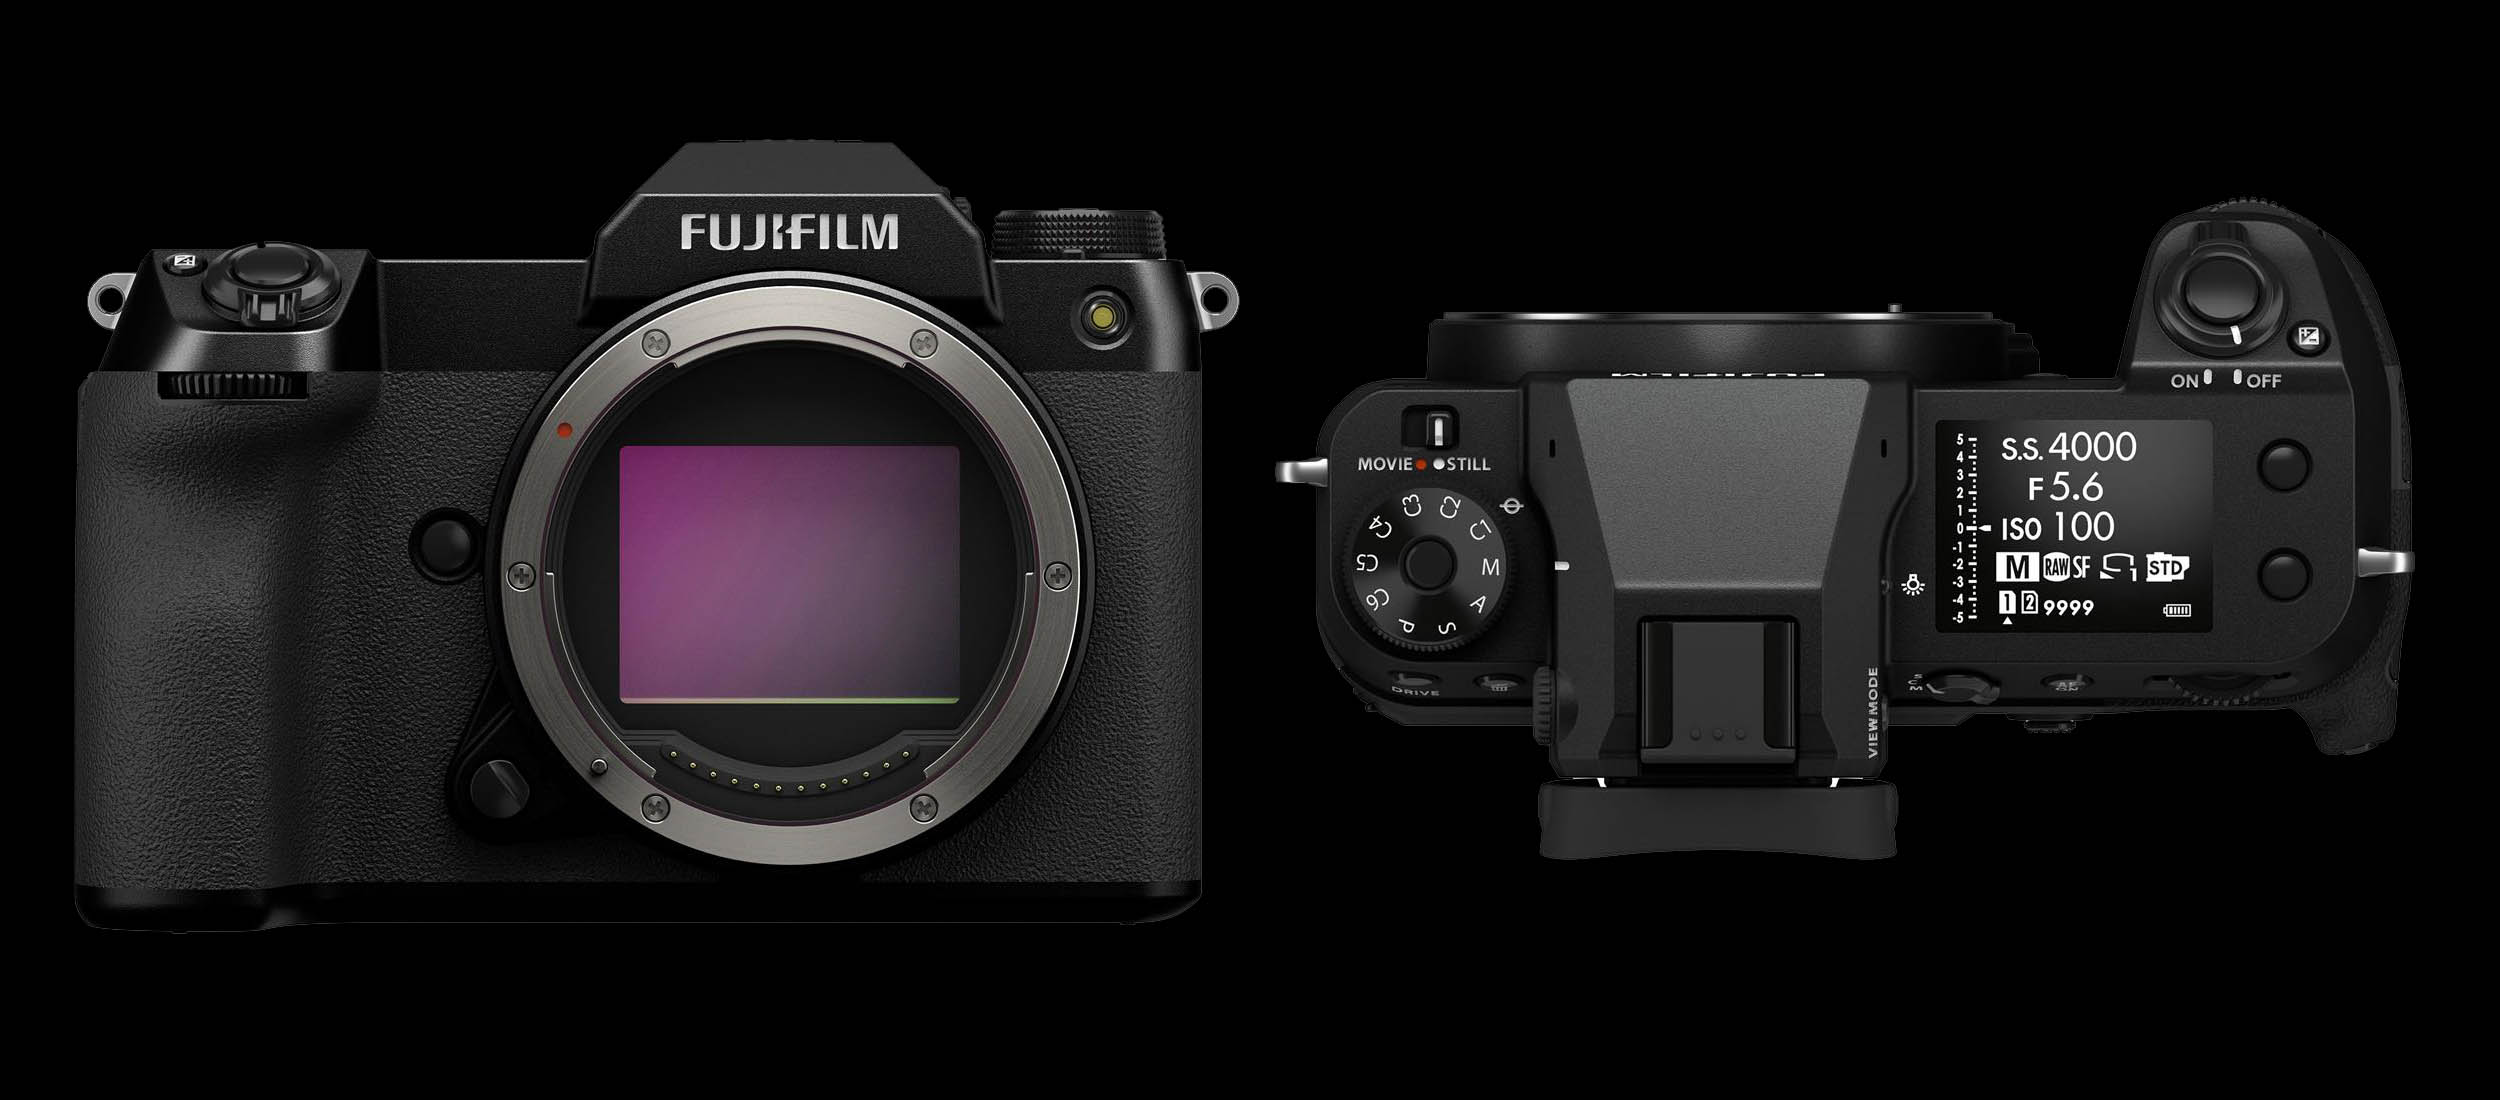 Sensor and Top Views of the New Fujifilm GFX100S 102MP Medium Format Camera